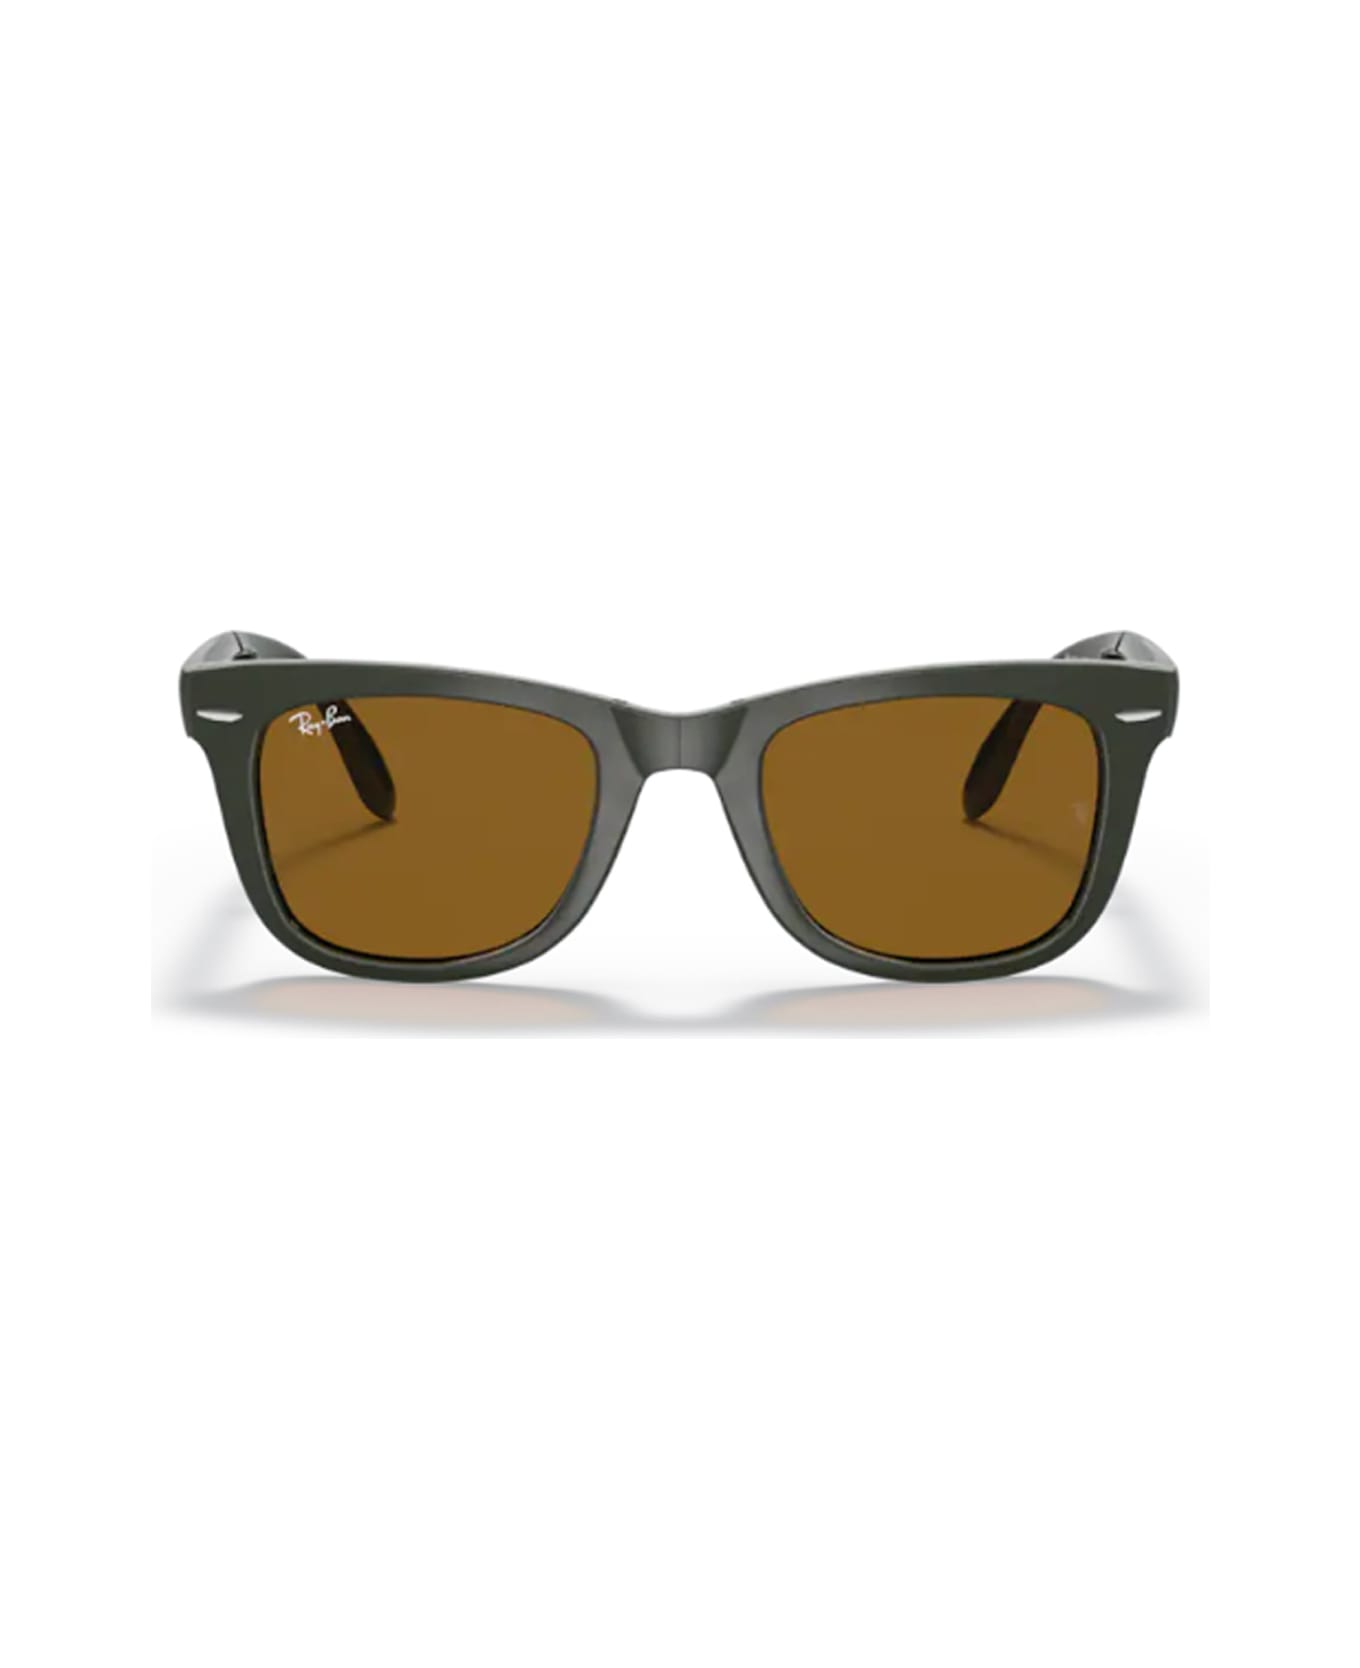 Ray-Ban Folding Wayfarer Rb4105 Sunglasses - Verde